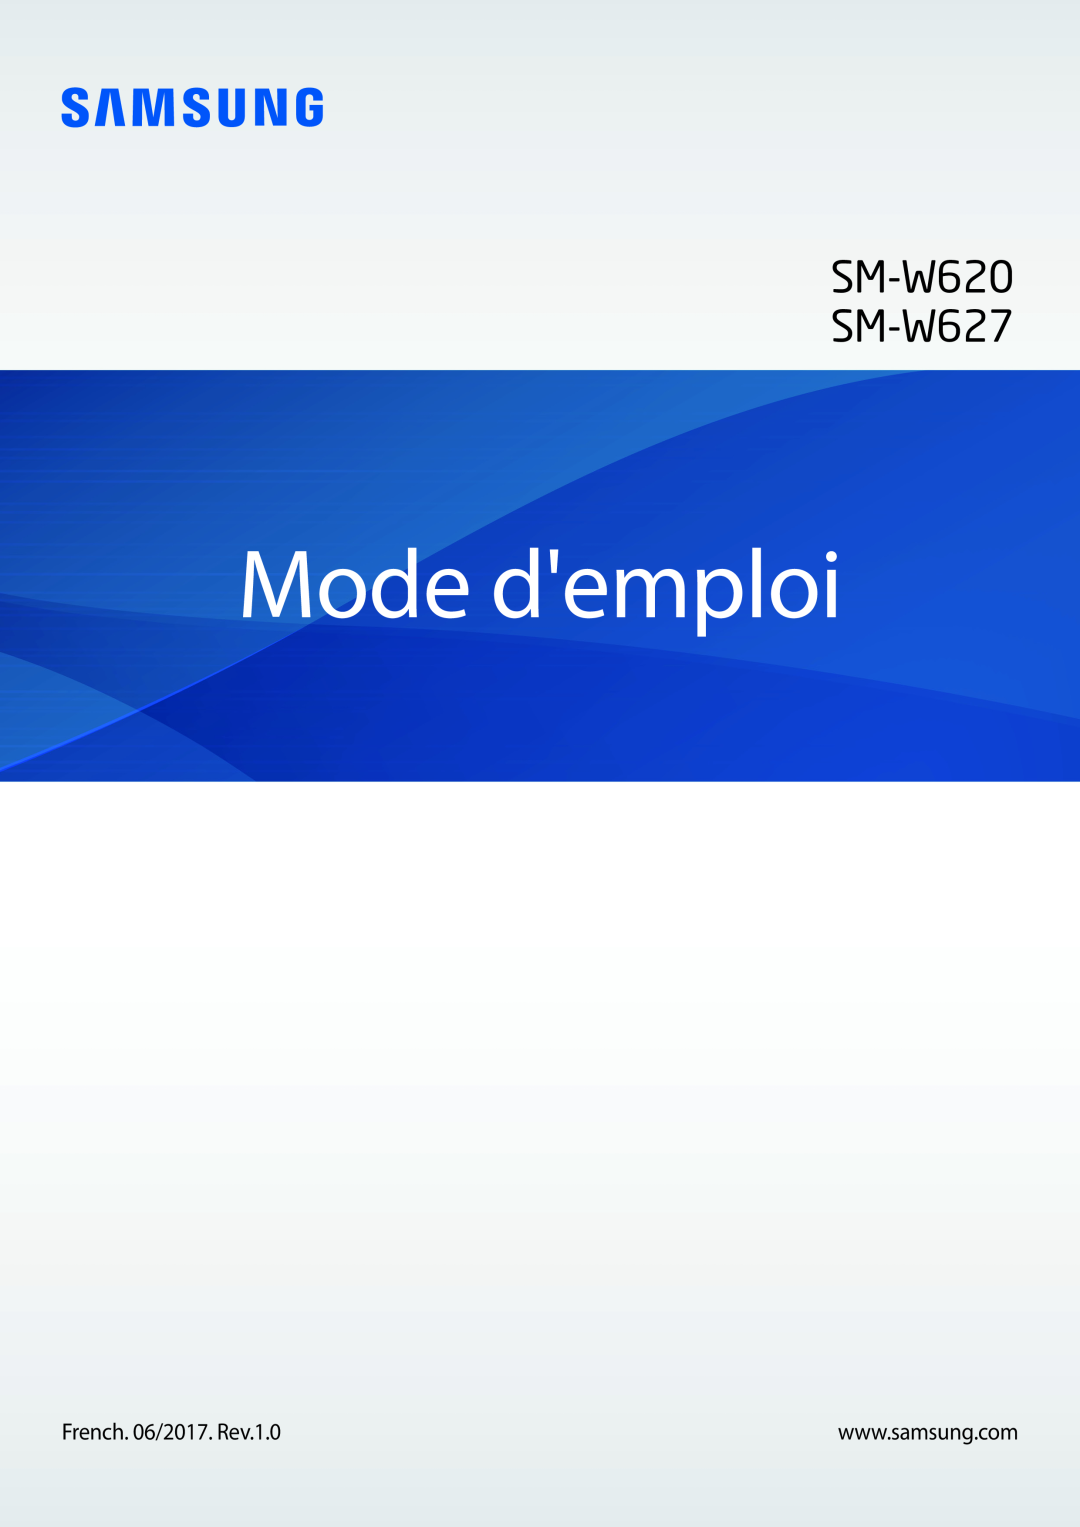 Samsung SM-W620NZKBXEF manual Mode demploi, SM-W620 SM-W627 